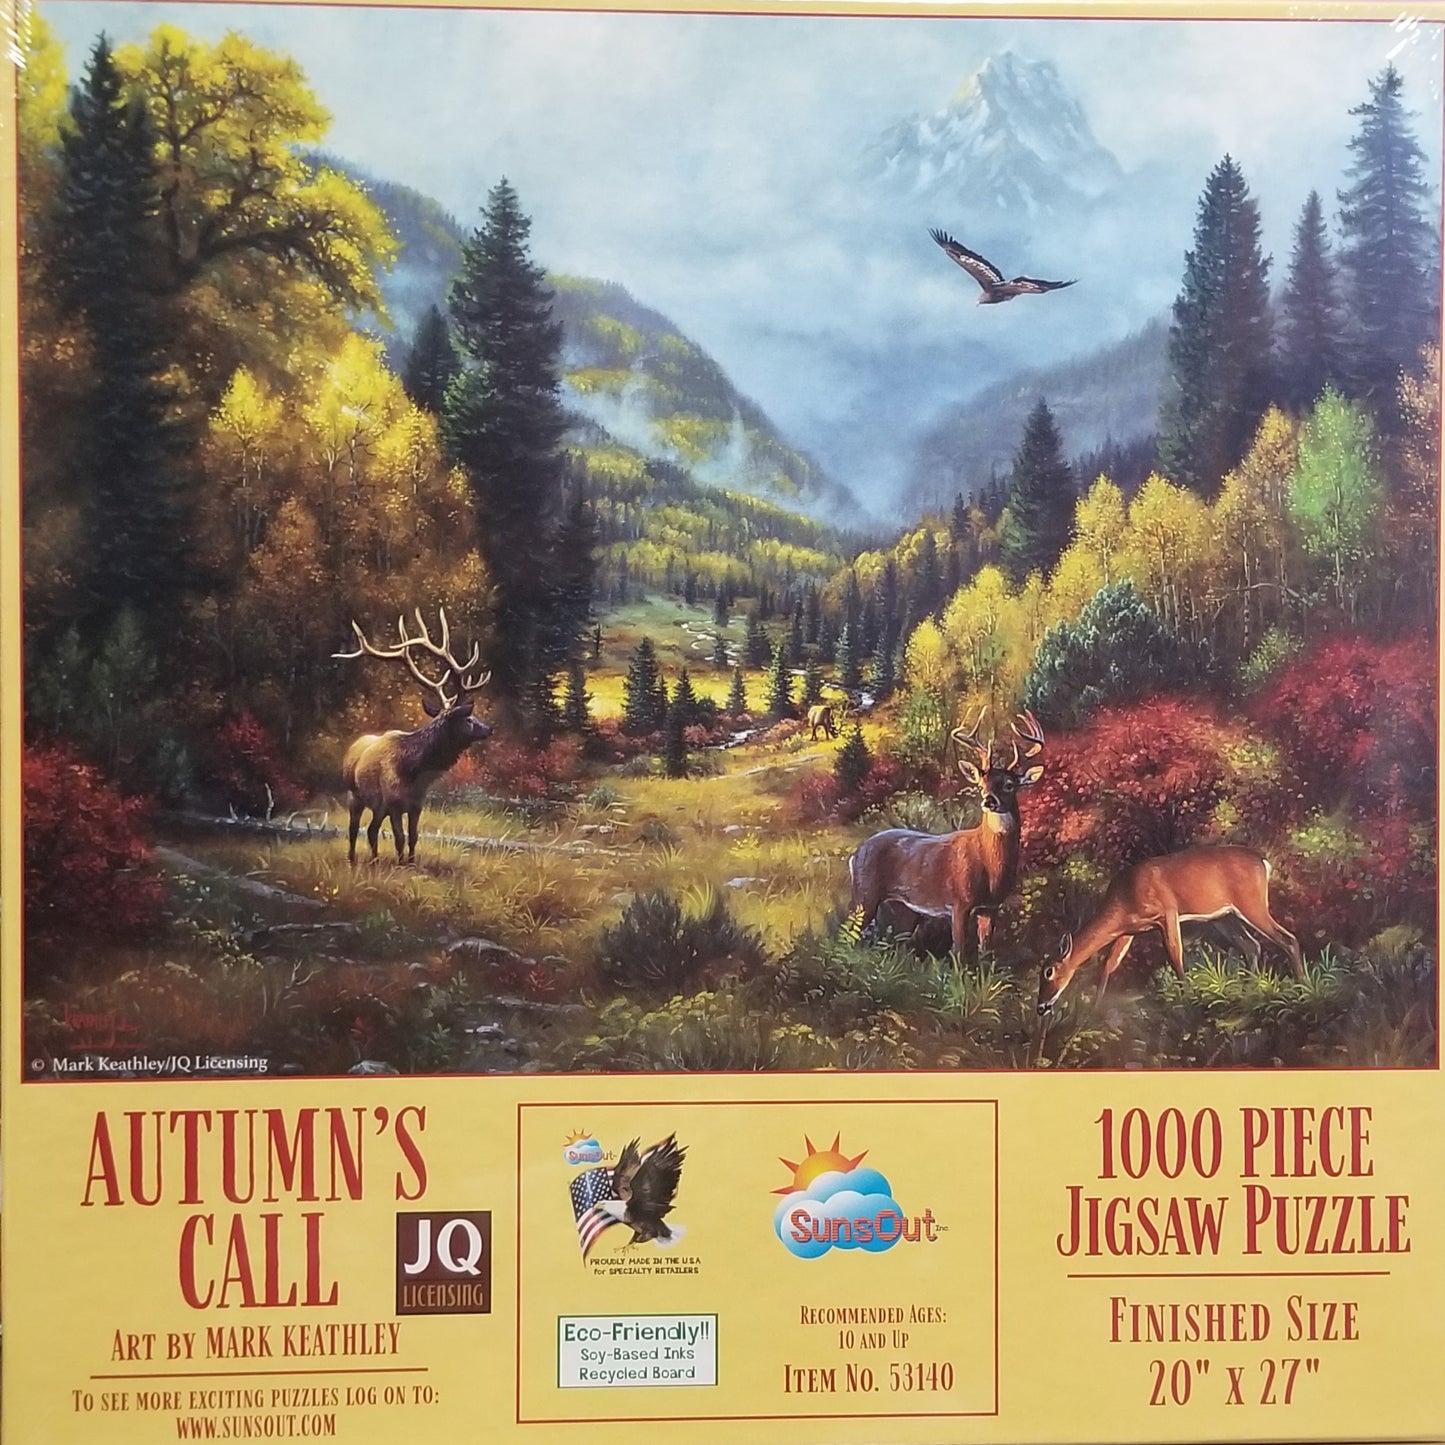 Autumn's Call af Mark Keathley, 1000 brikker puslespil